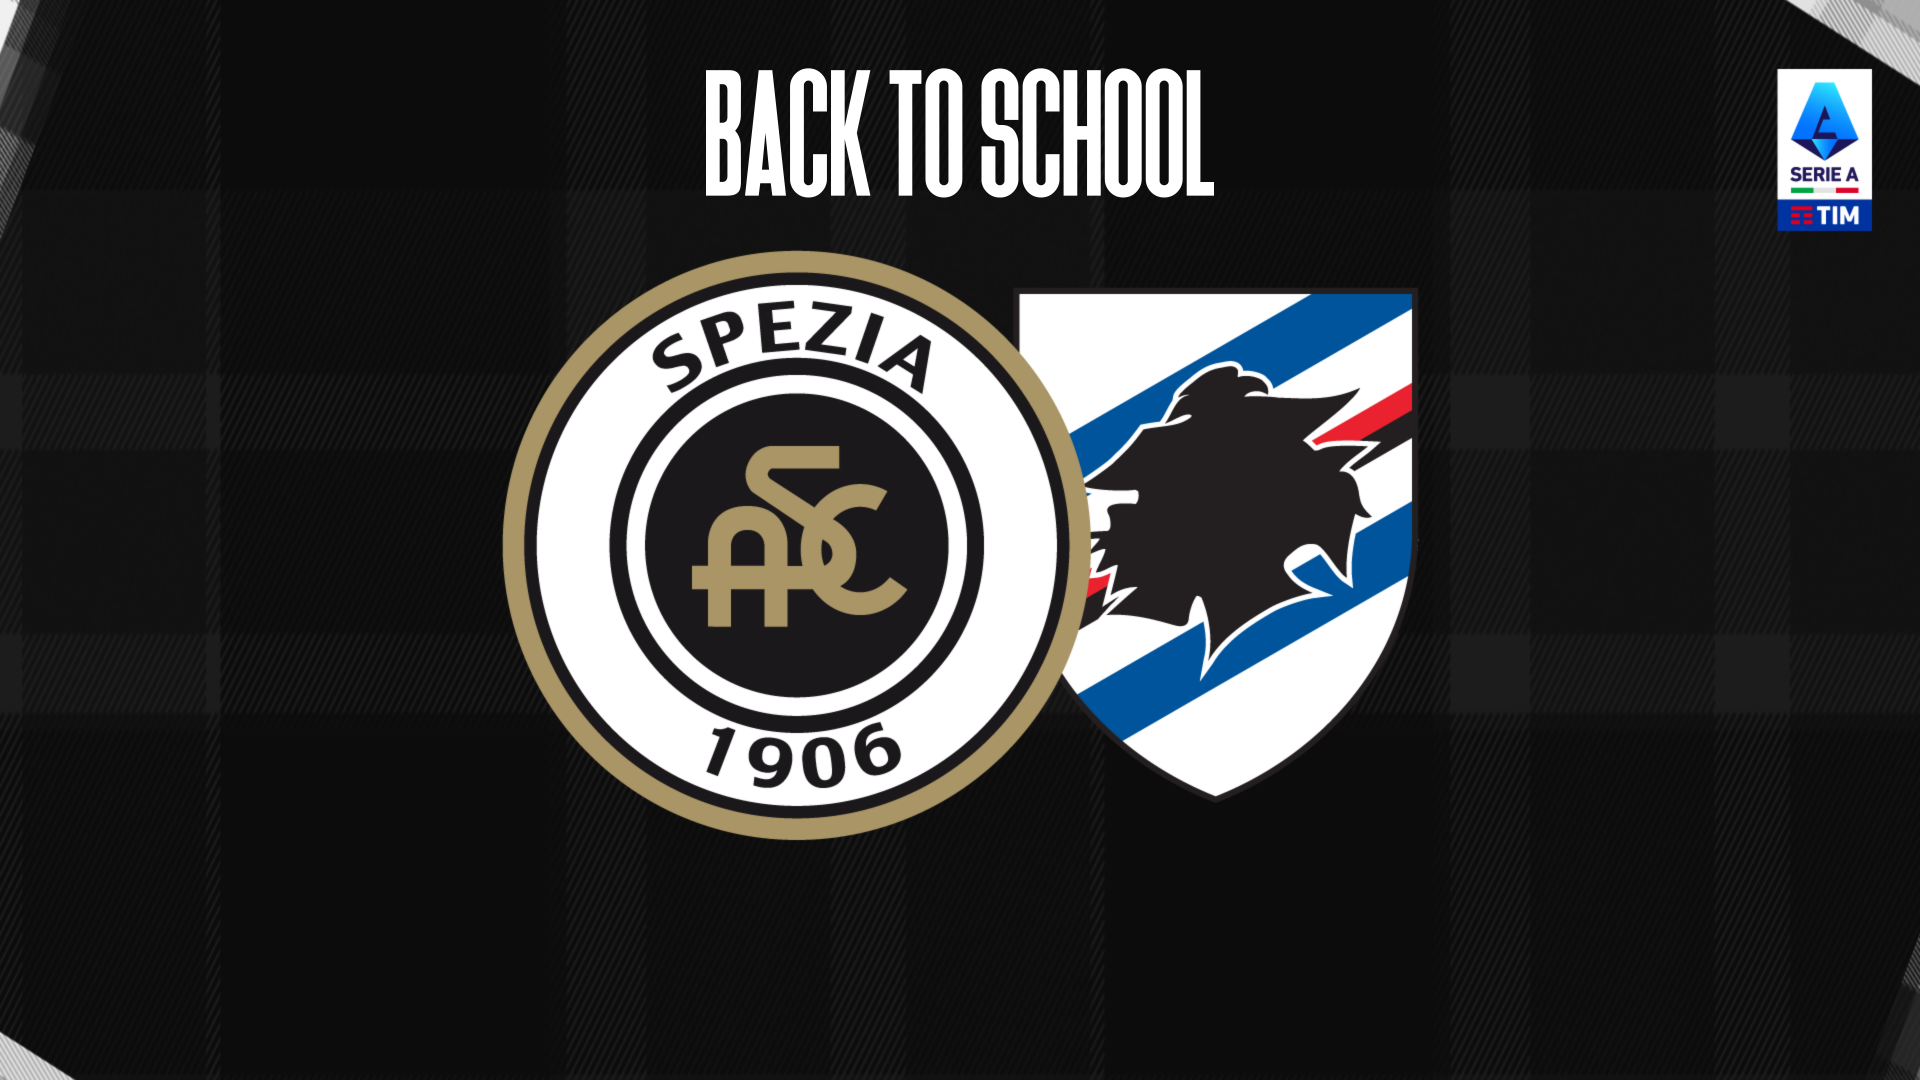 Spezia-Sampdoria: back to school